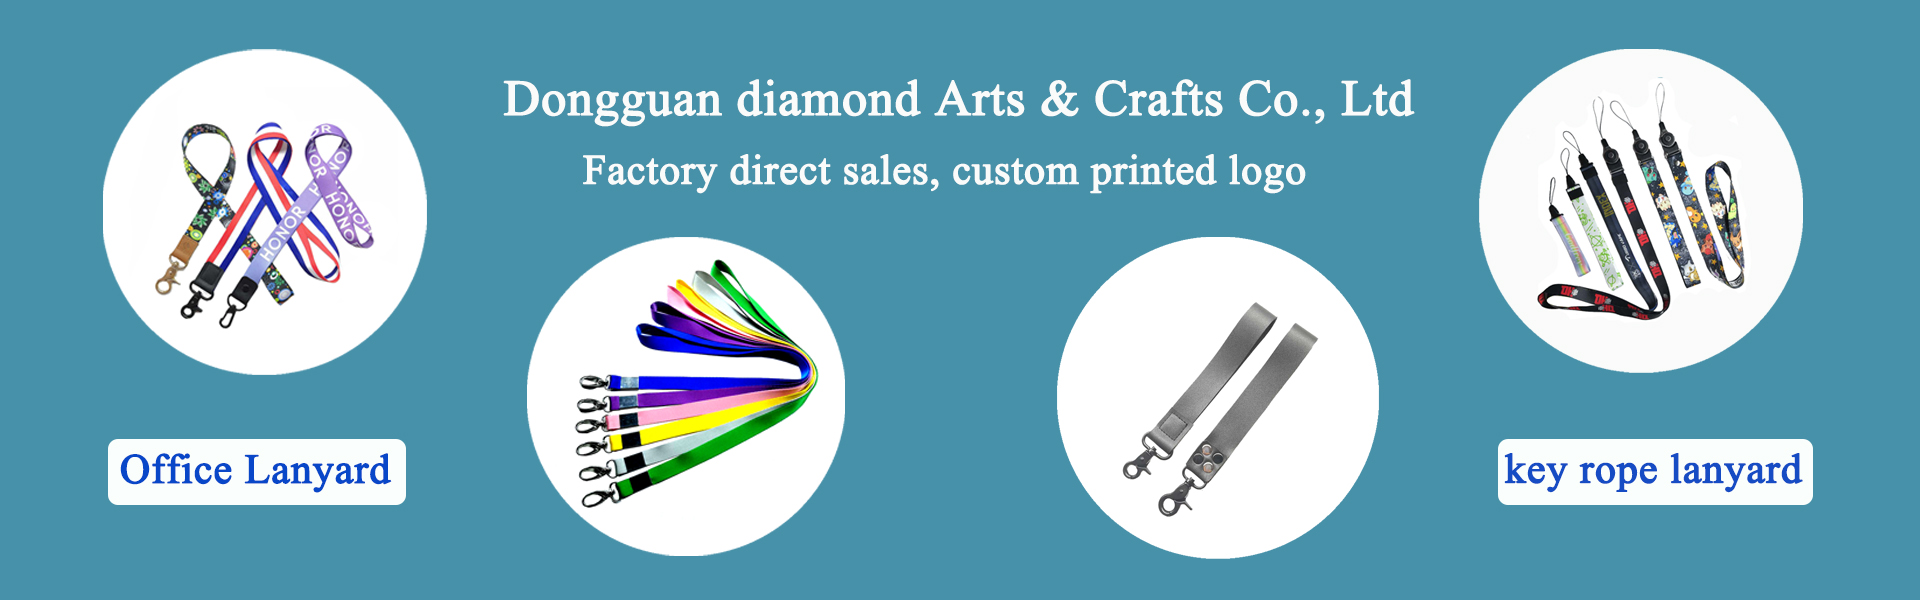 Lanyard,Bekleidungszubehör,Haustiervorräte,Dongguan diamond Arts & Crafts Co., Ltd